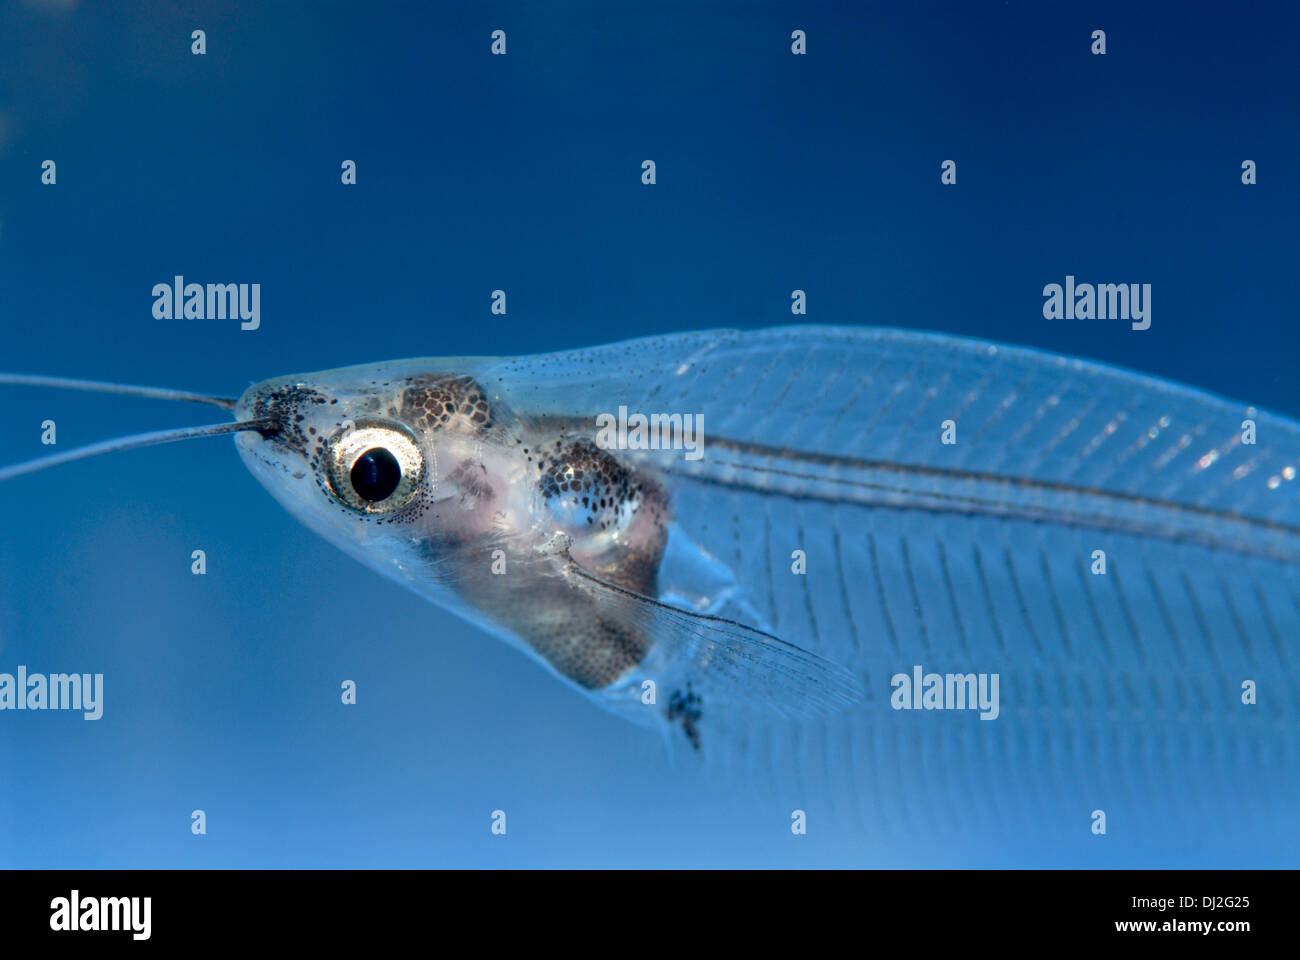 Asian Glass Catfish, Stock Photo